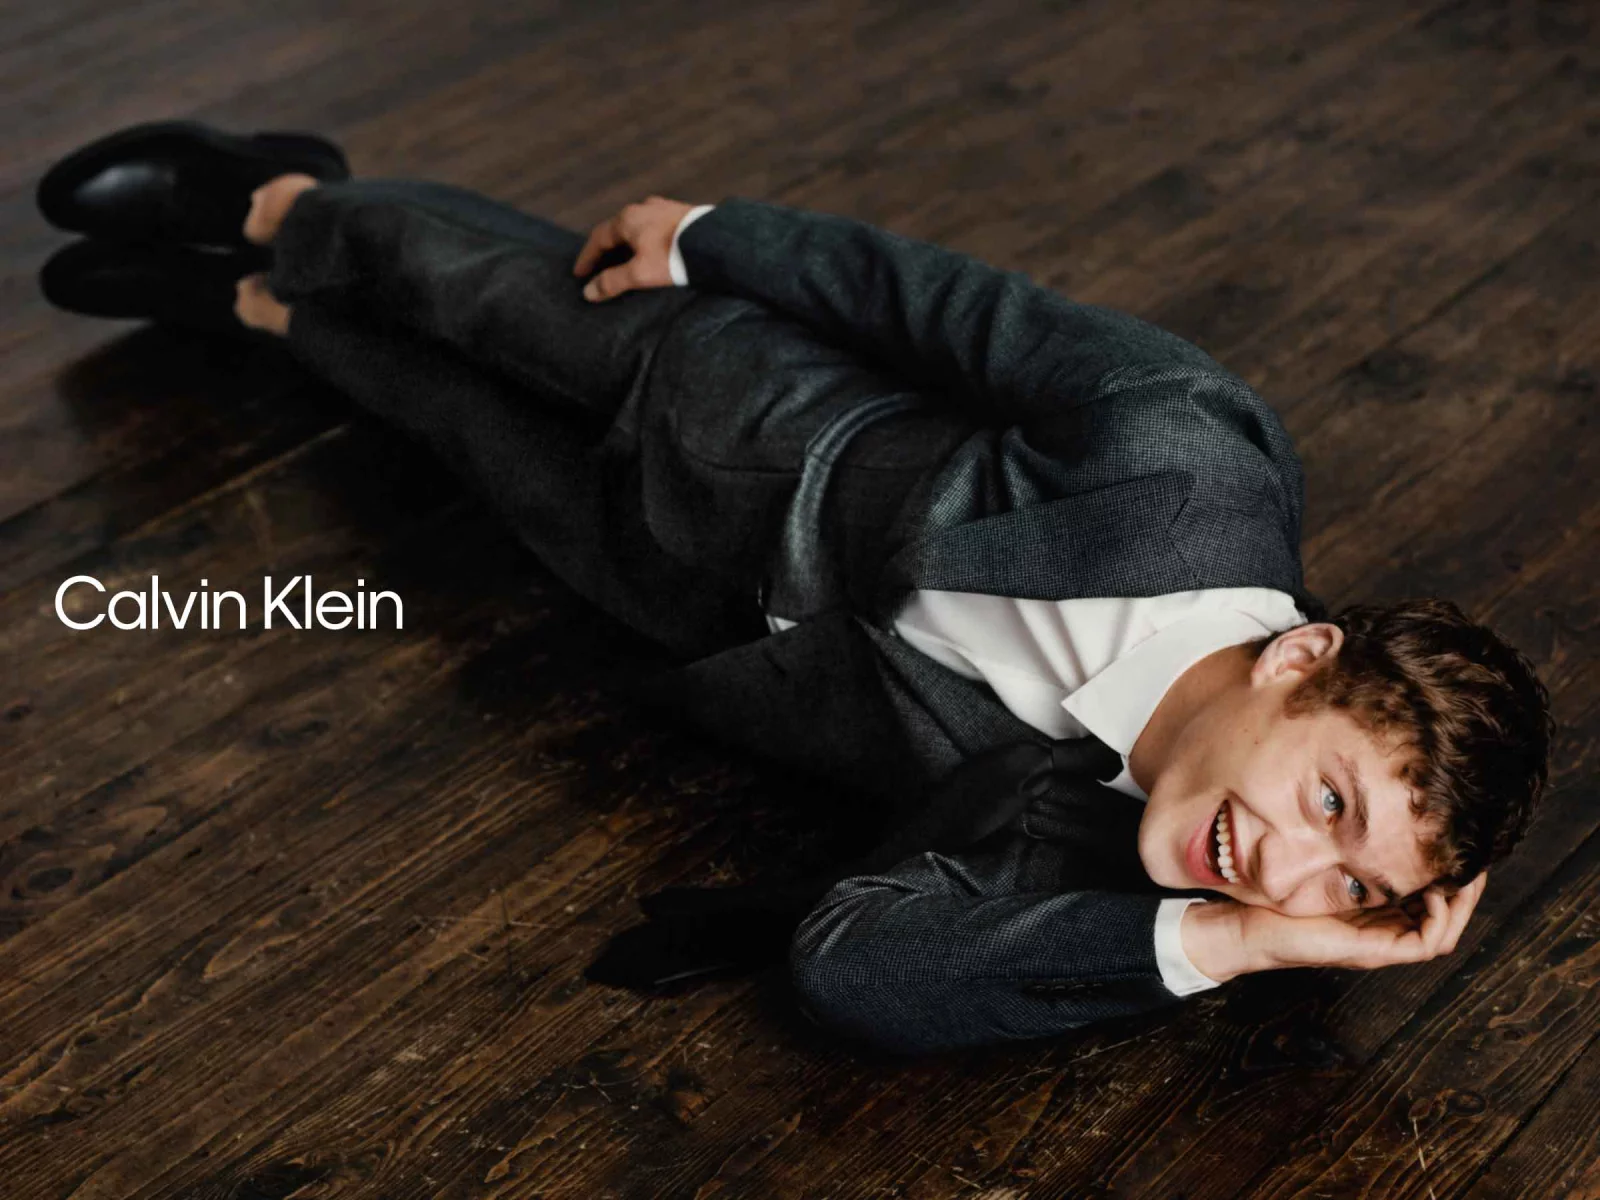 Calvin Klein 5 by Paul Maximilian SCHLOSSER